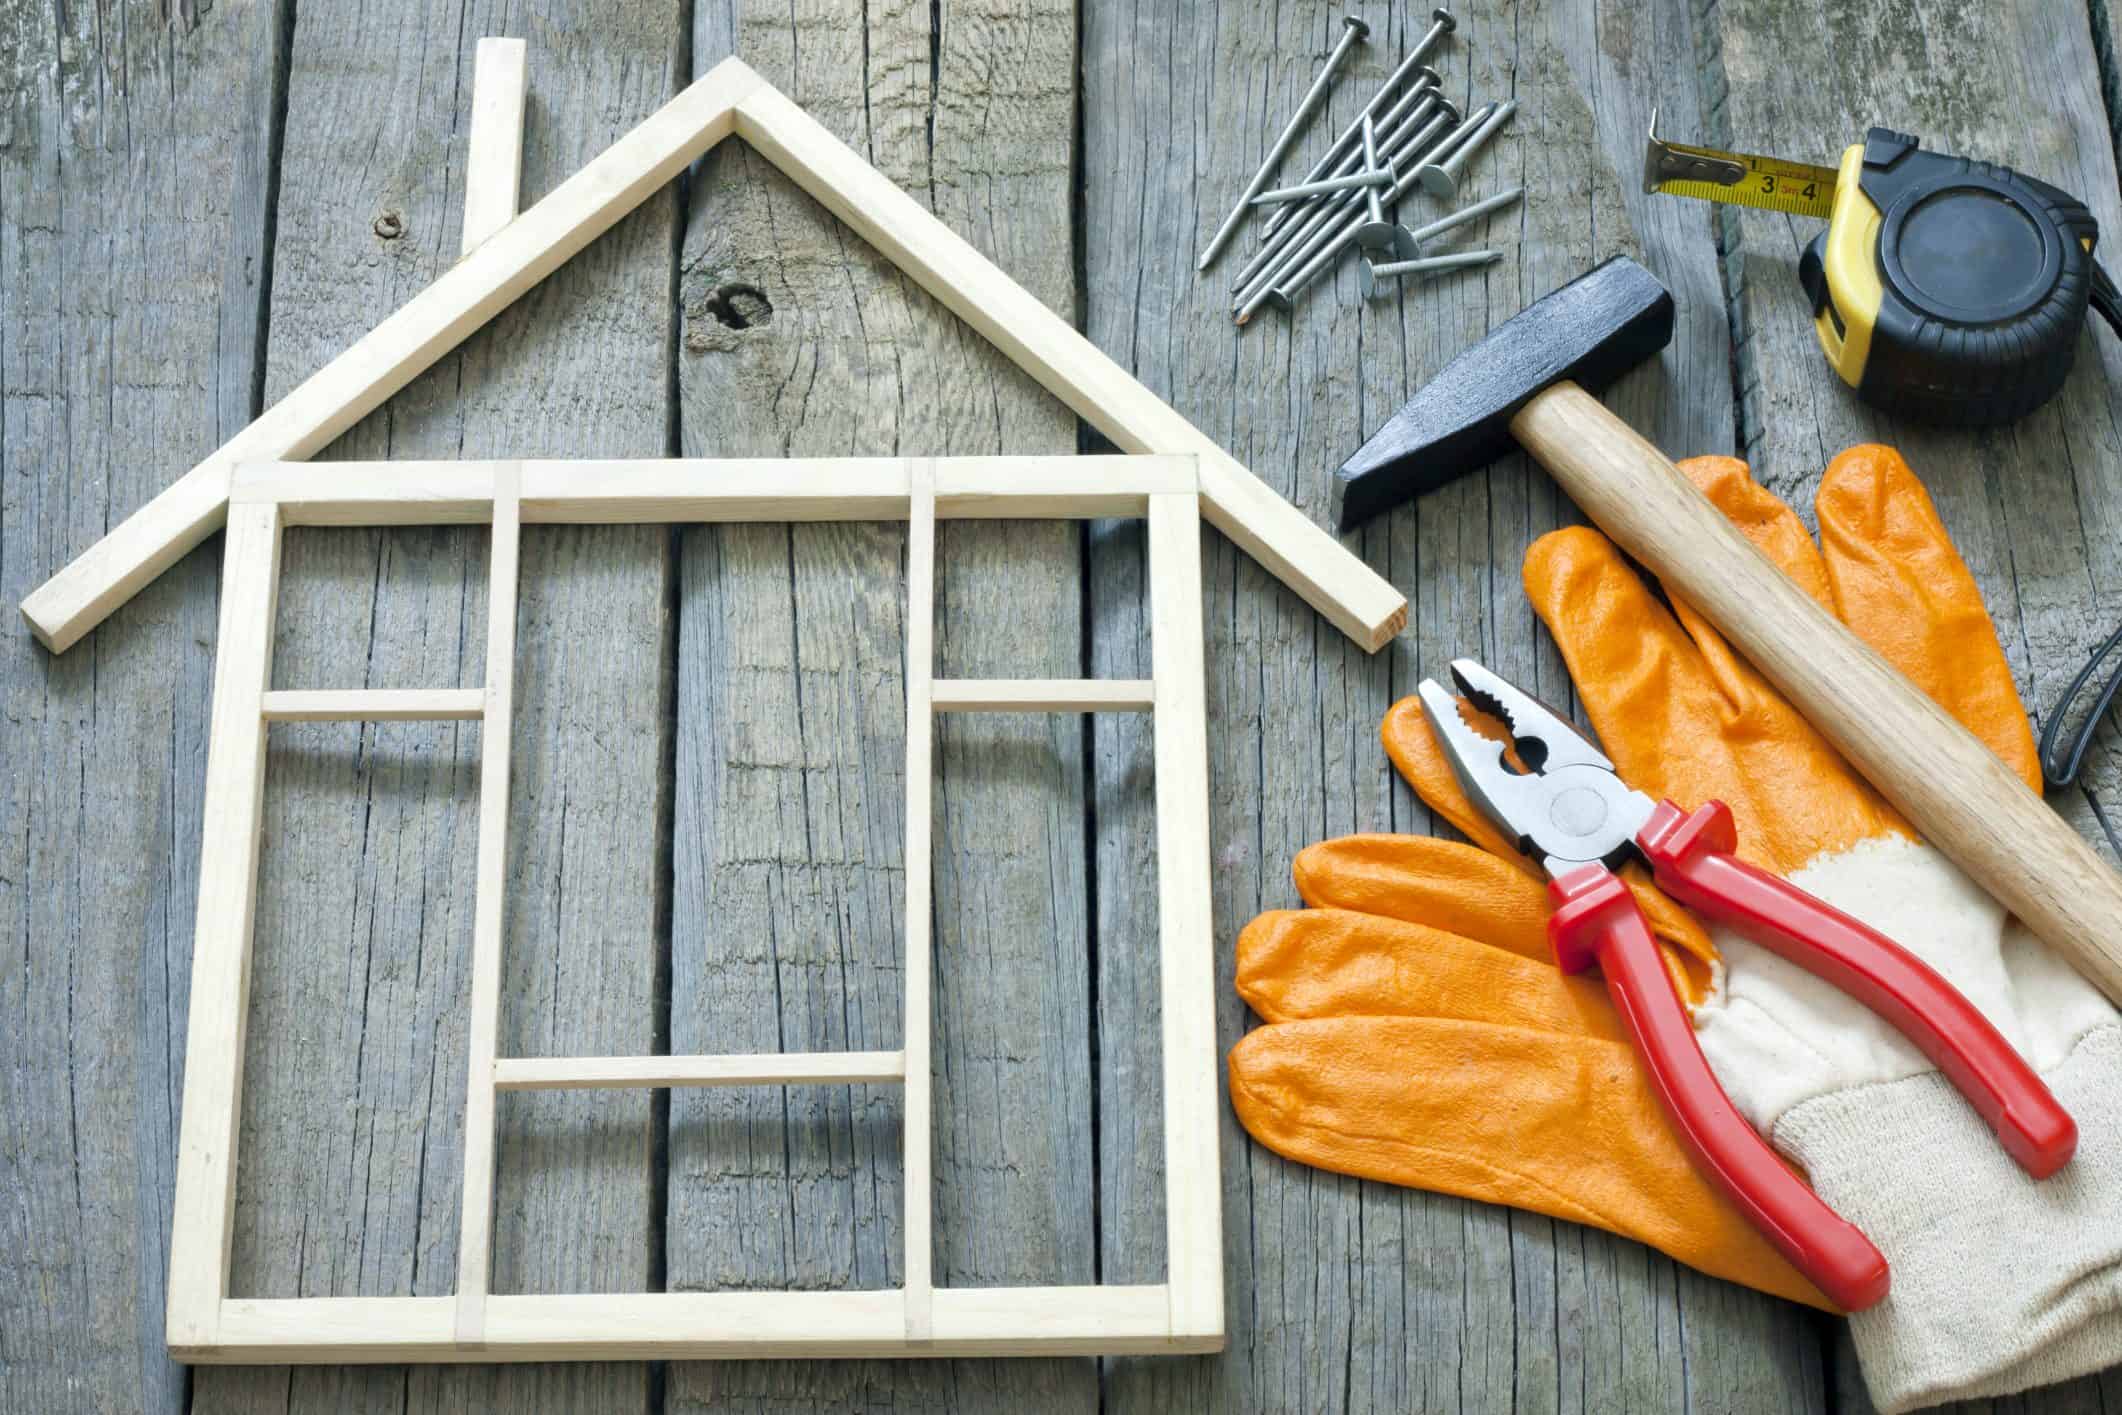 How to Start a Home Improvement Business #7 - damianmartinez.com